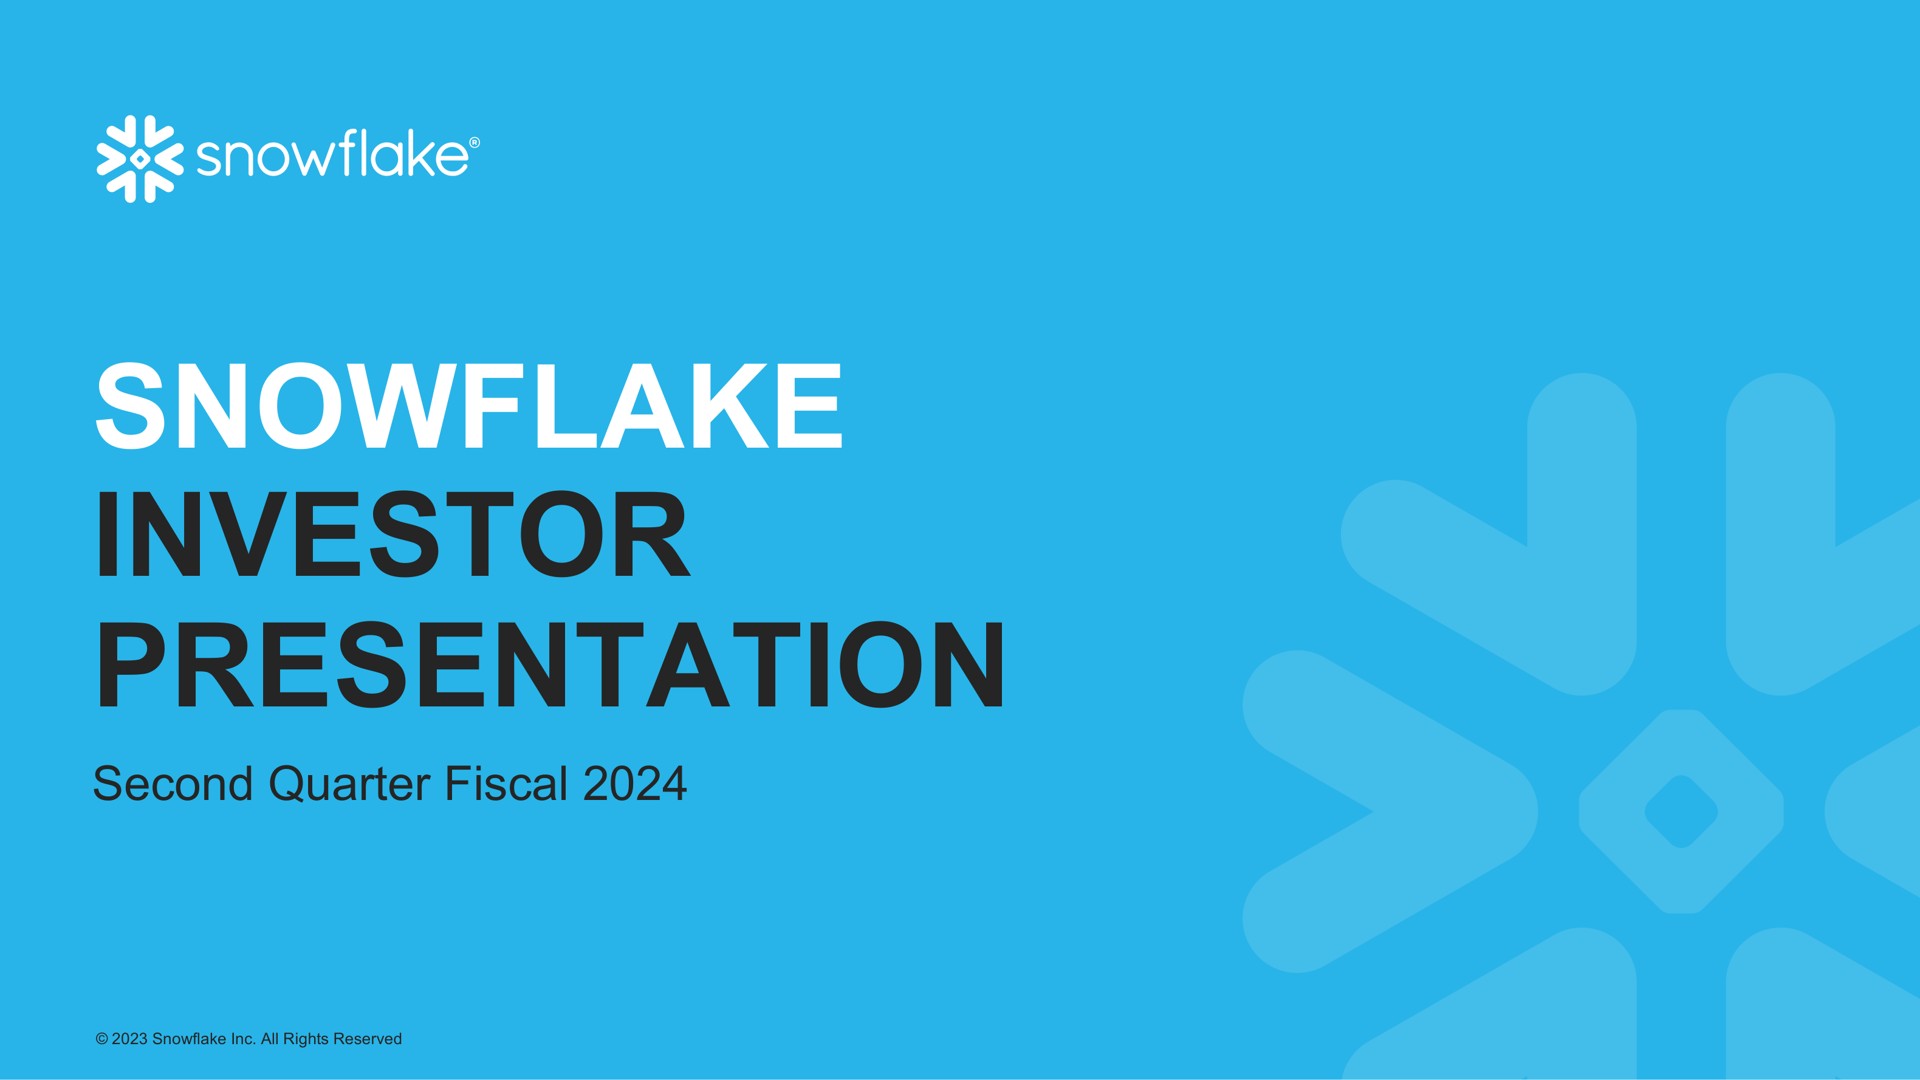 snowflake investor presentation second quarter fiscal | Snowflake